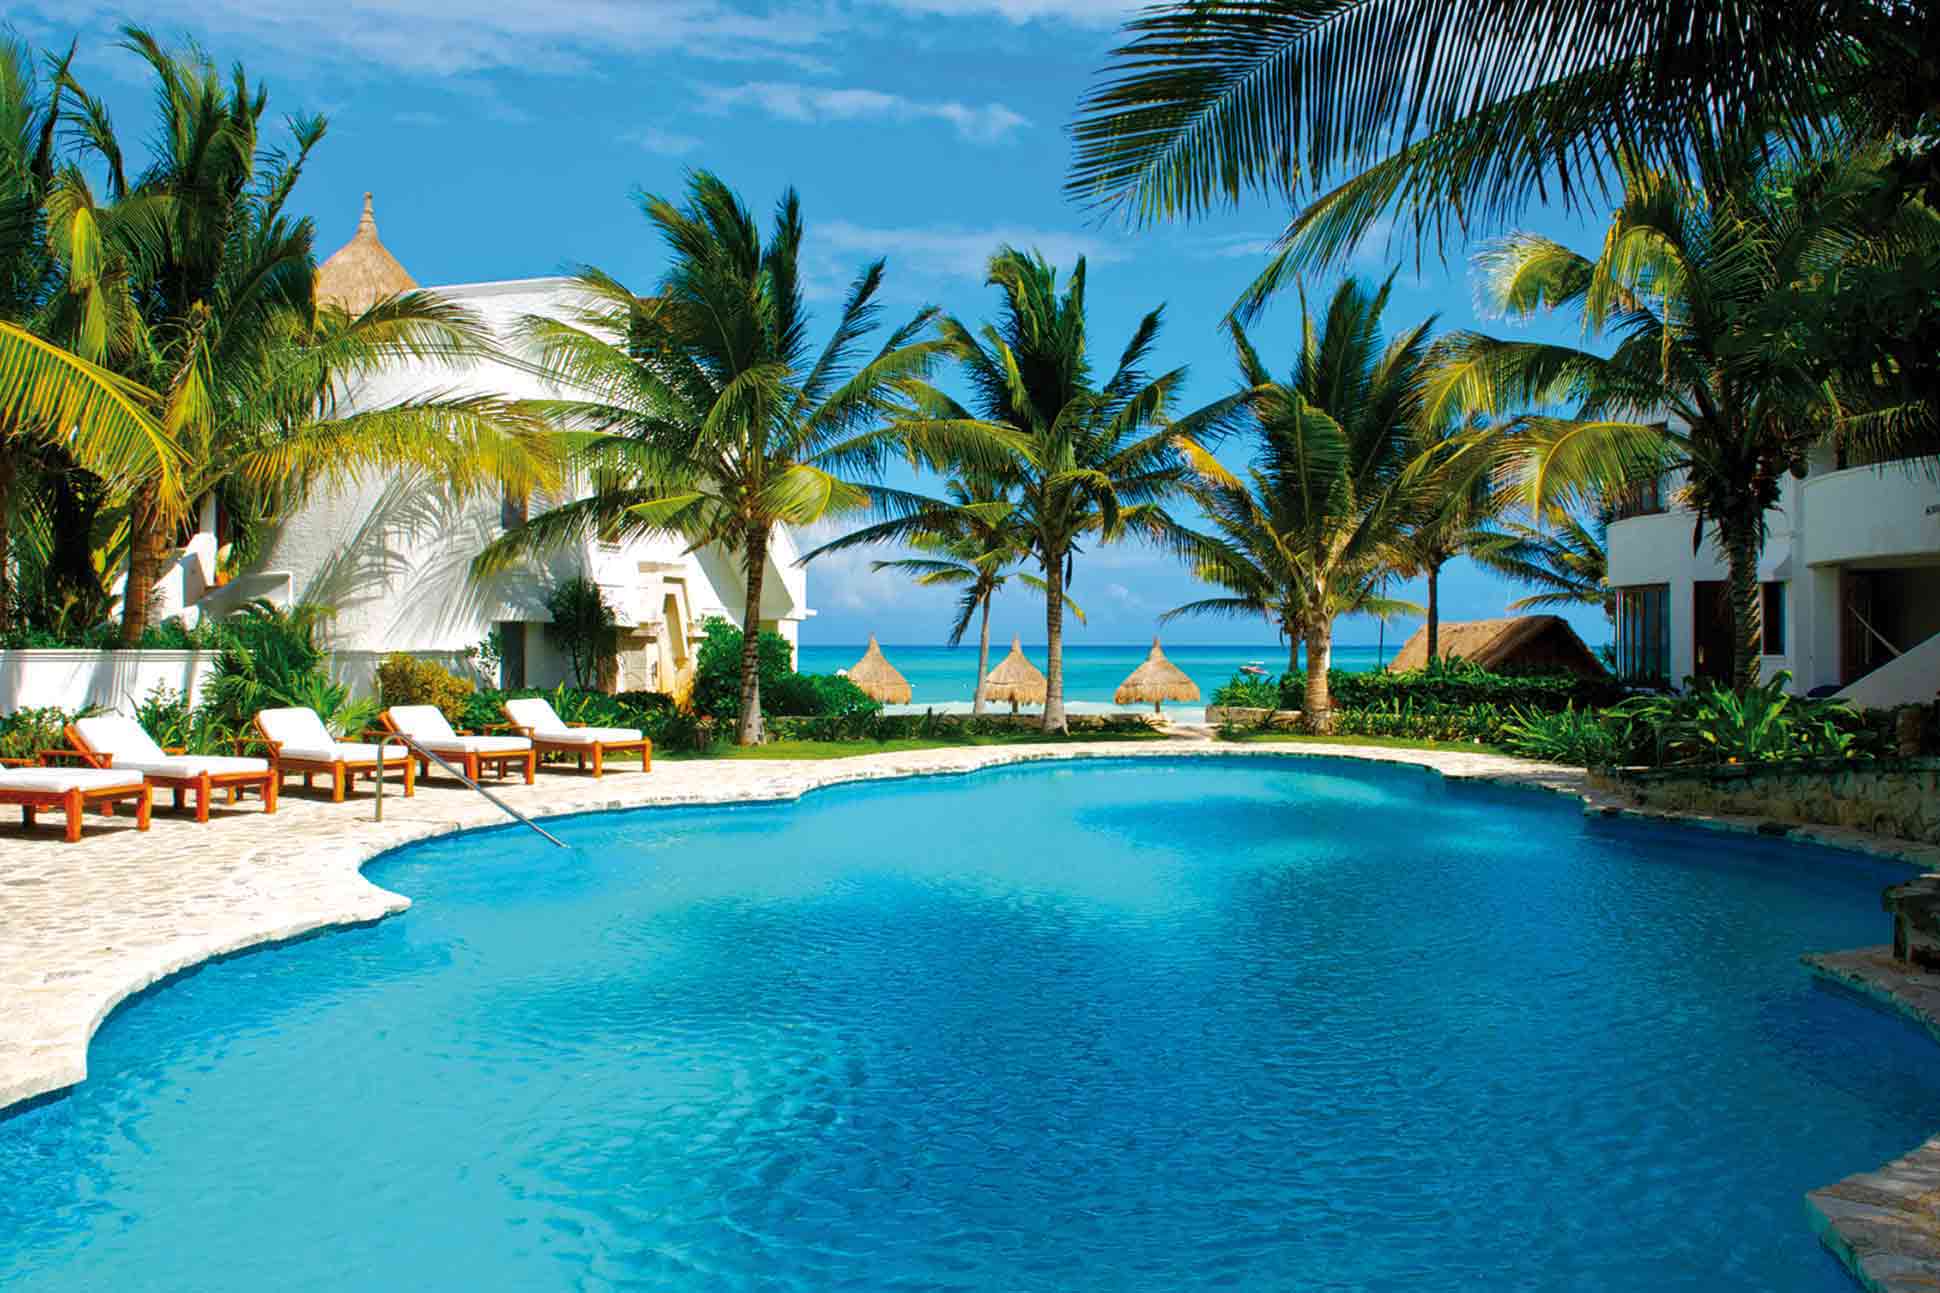 Belmond Maroma Resort & Spa Blog - A Riviera Maya Gem - Adam